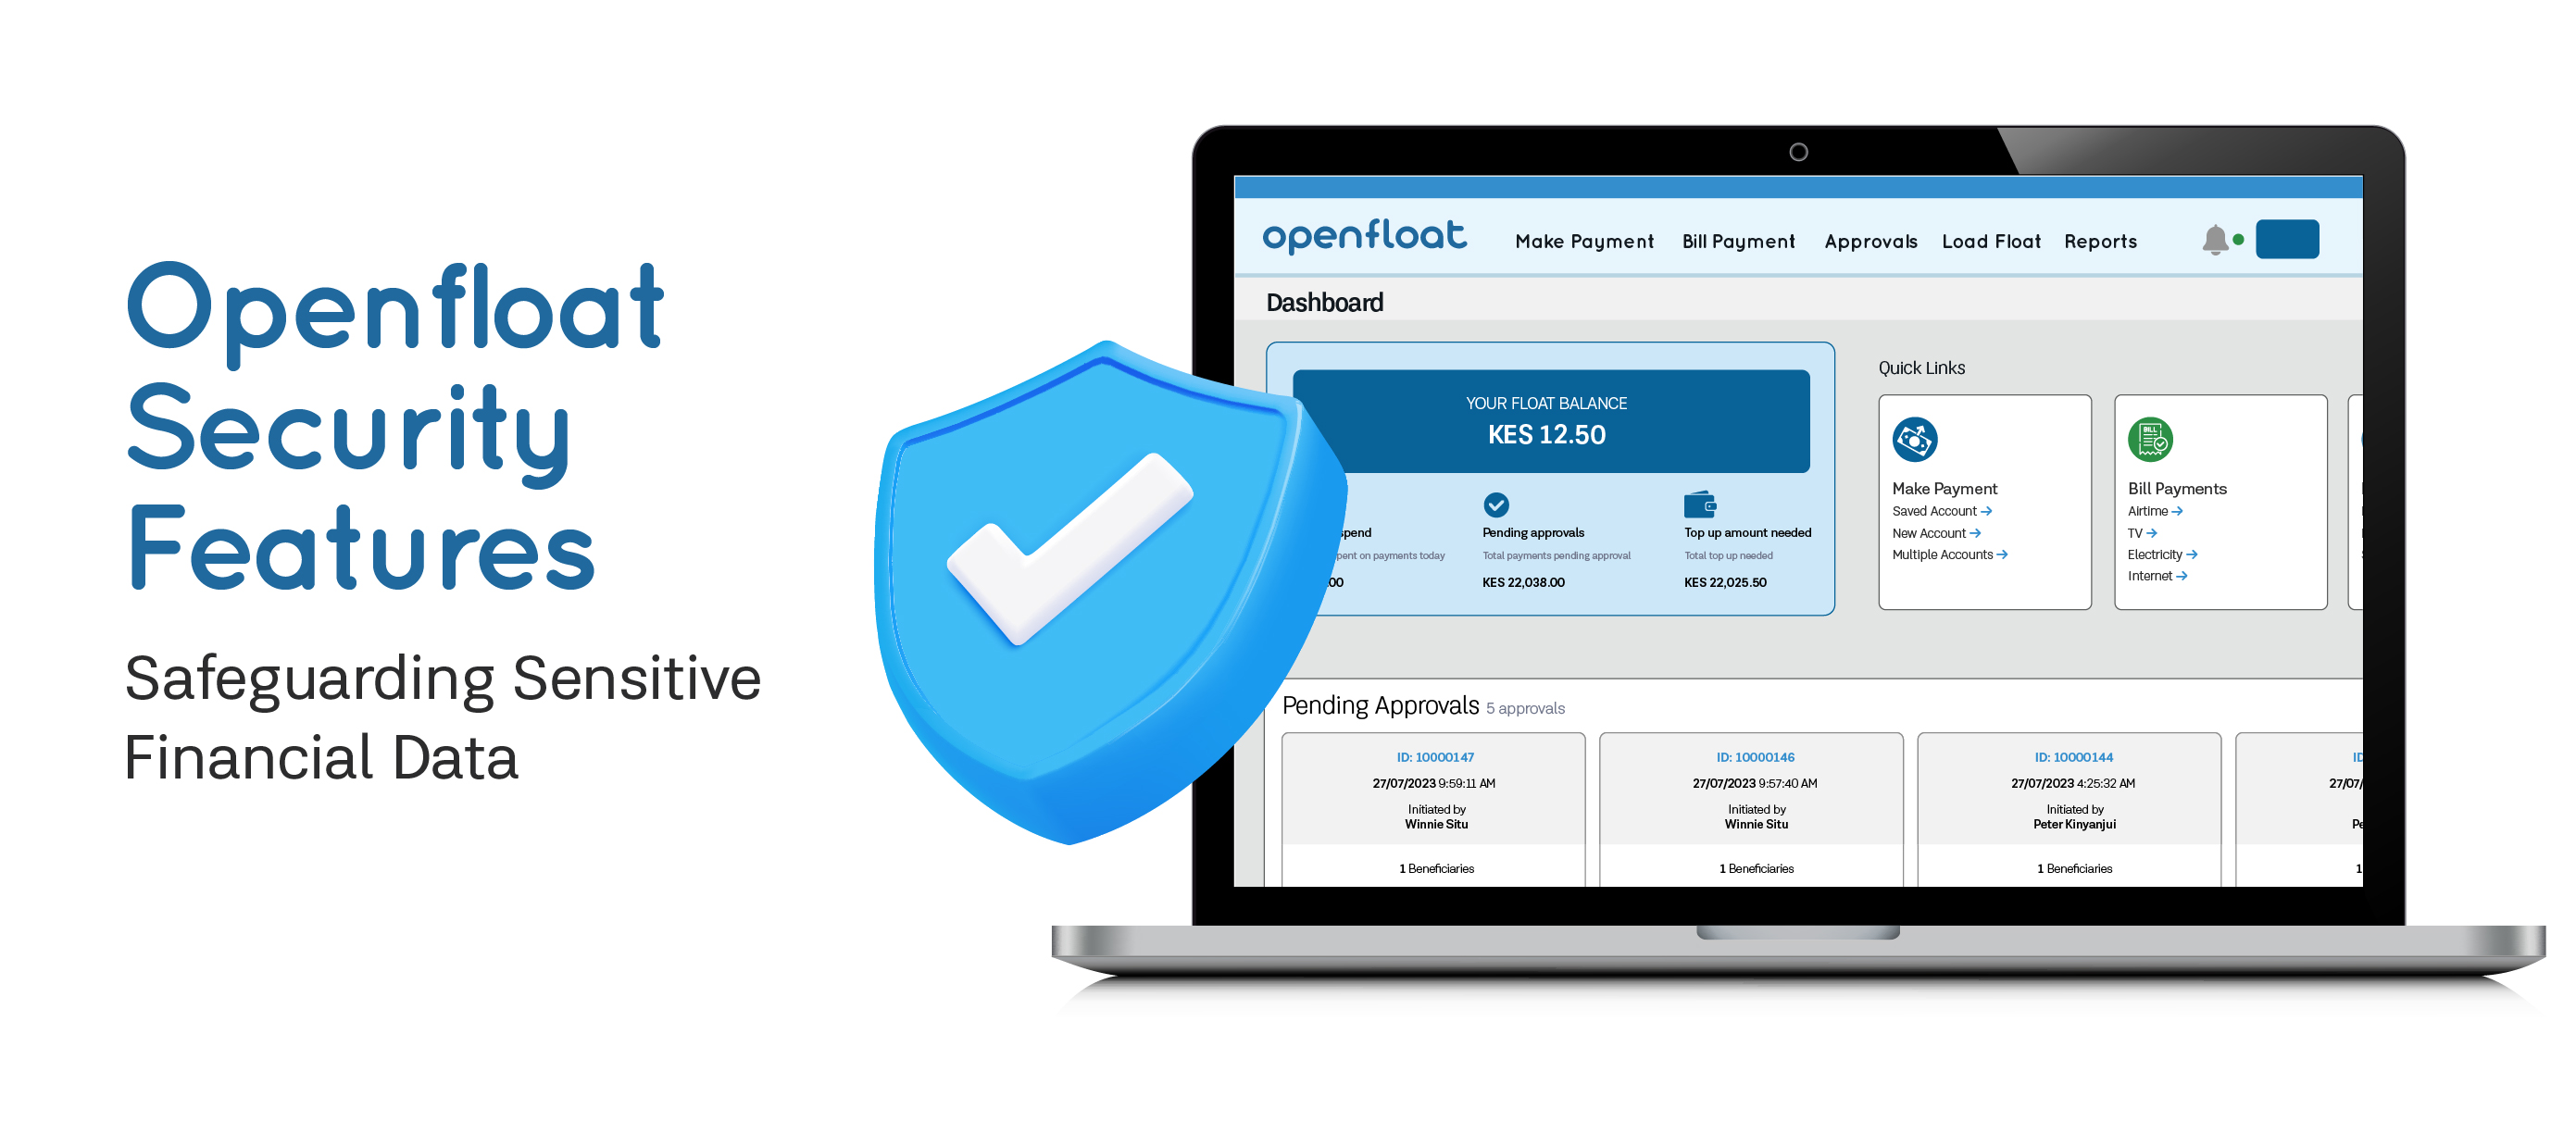 Openfloat Security Features: Safeguarding Sensitive Financial Data